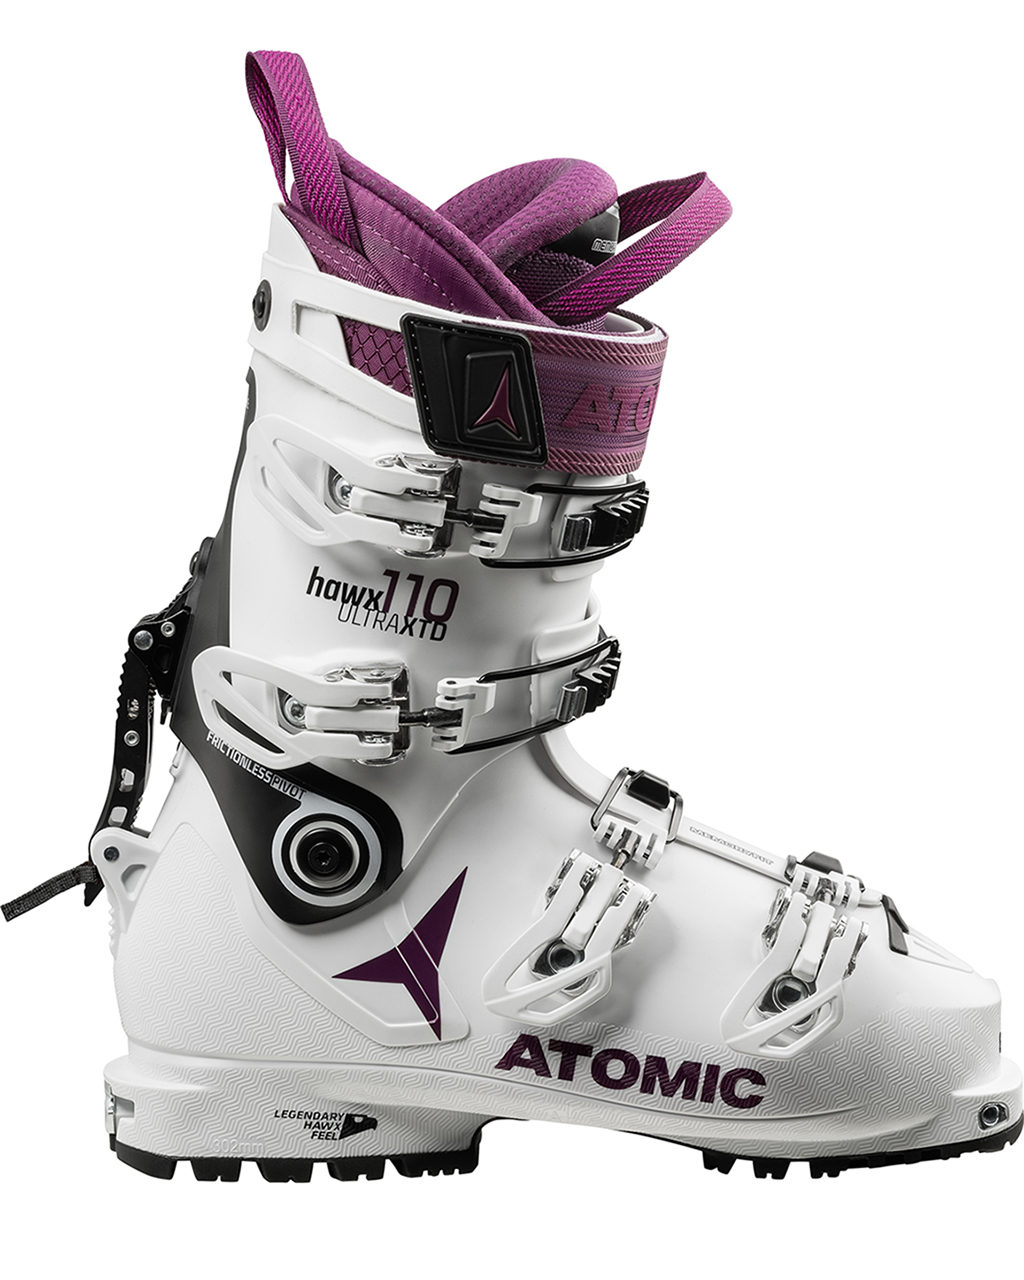 Atomic Hawx Ultra XTD 110 W 18/19 White/Black/Purple (Storlek 24.5)